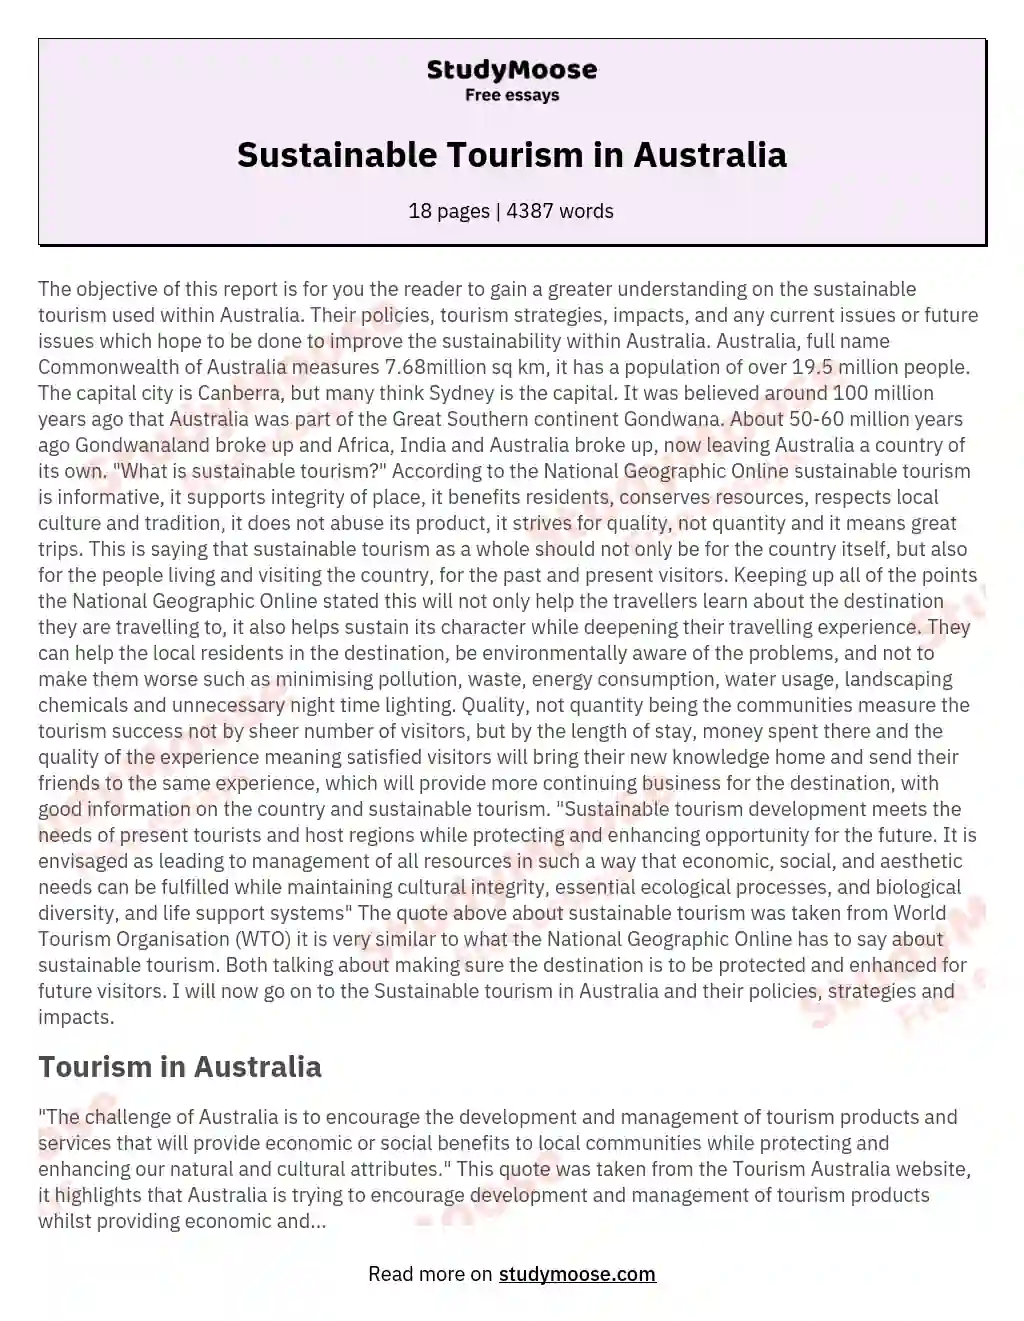 Sustainable Tourism in Australia essay